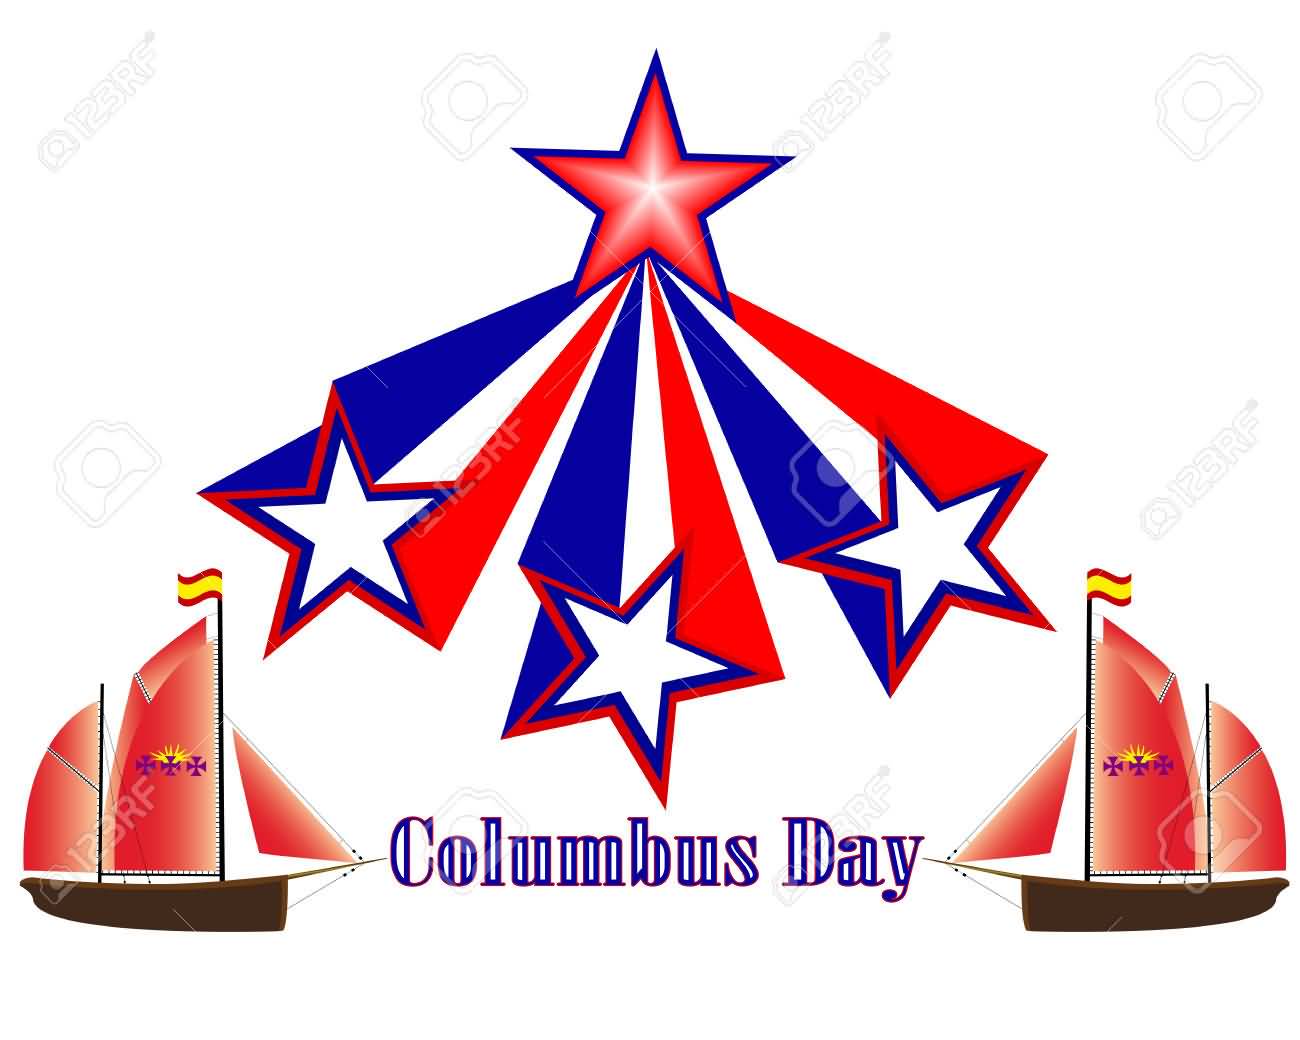 Columbus Day Vector Illustration